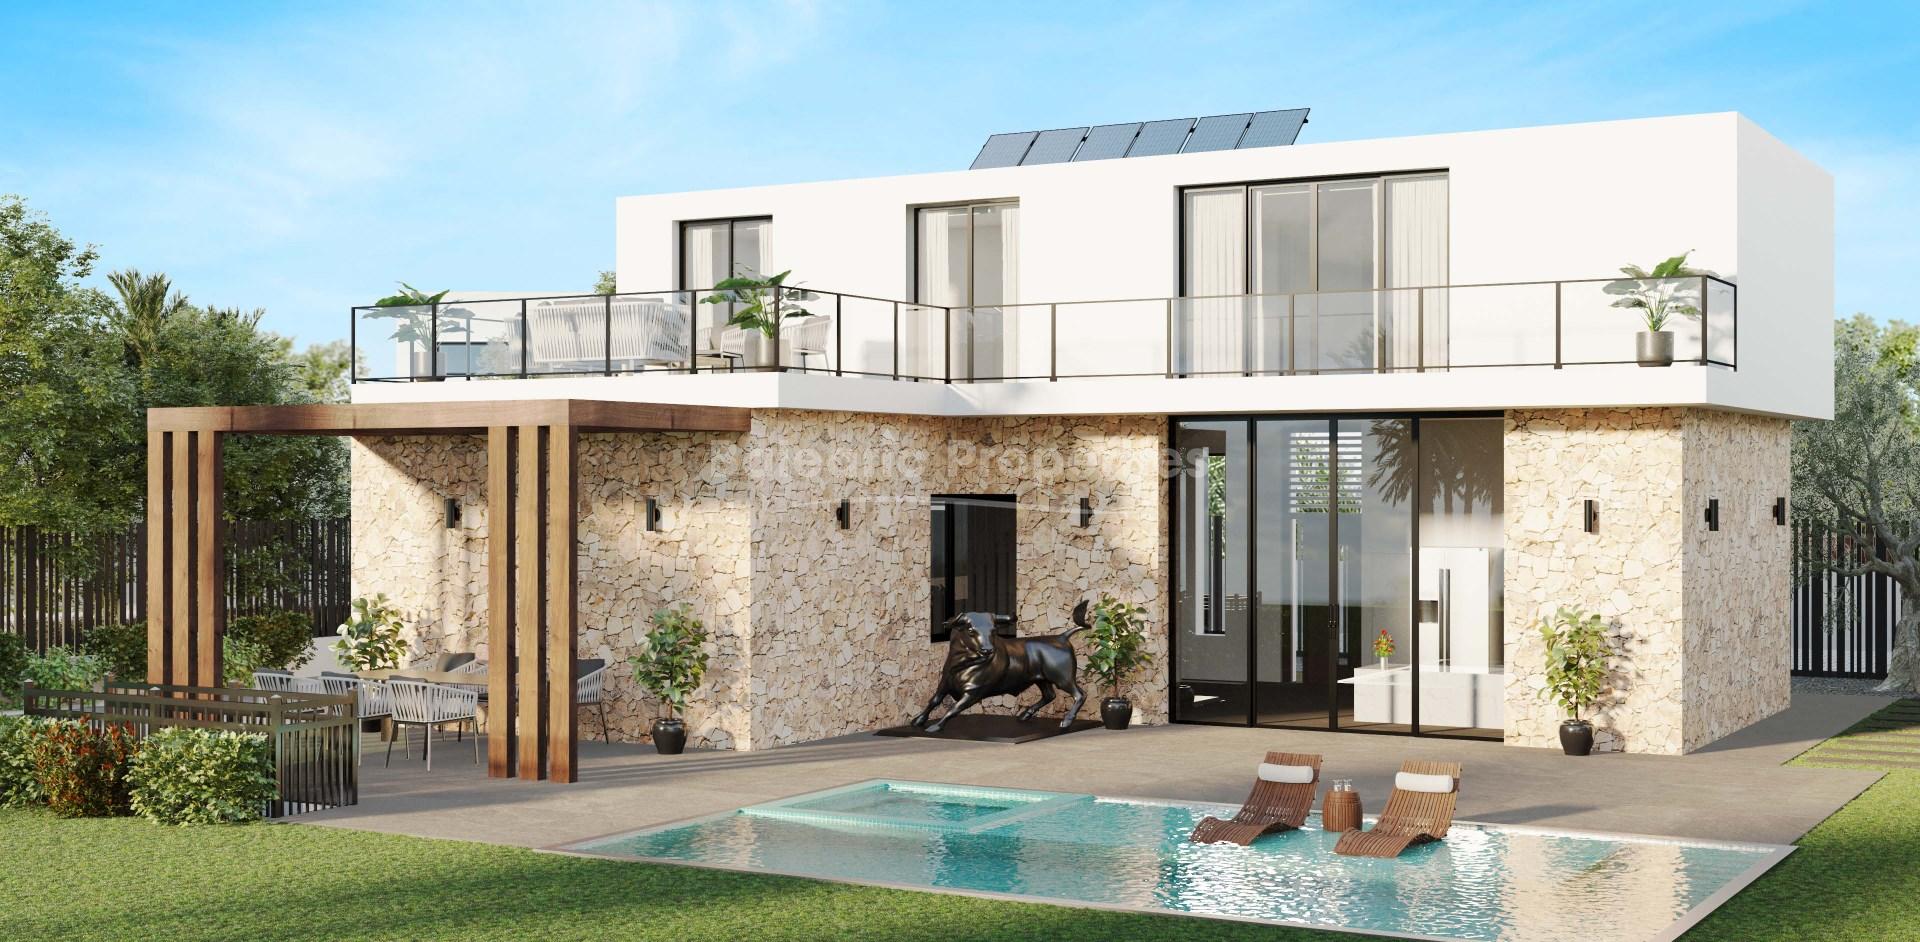 Modern luxury villa project with pool for sale in a quiet area near Sa Rapita, Mallorca